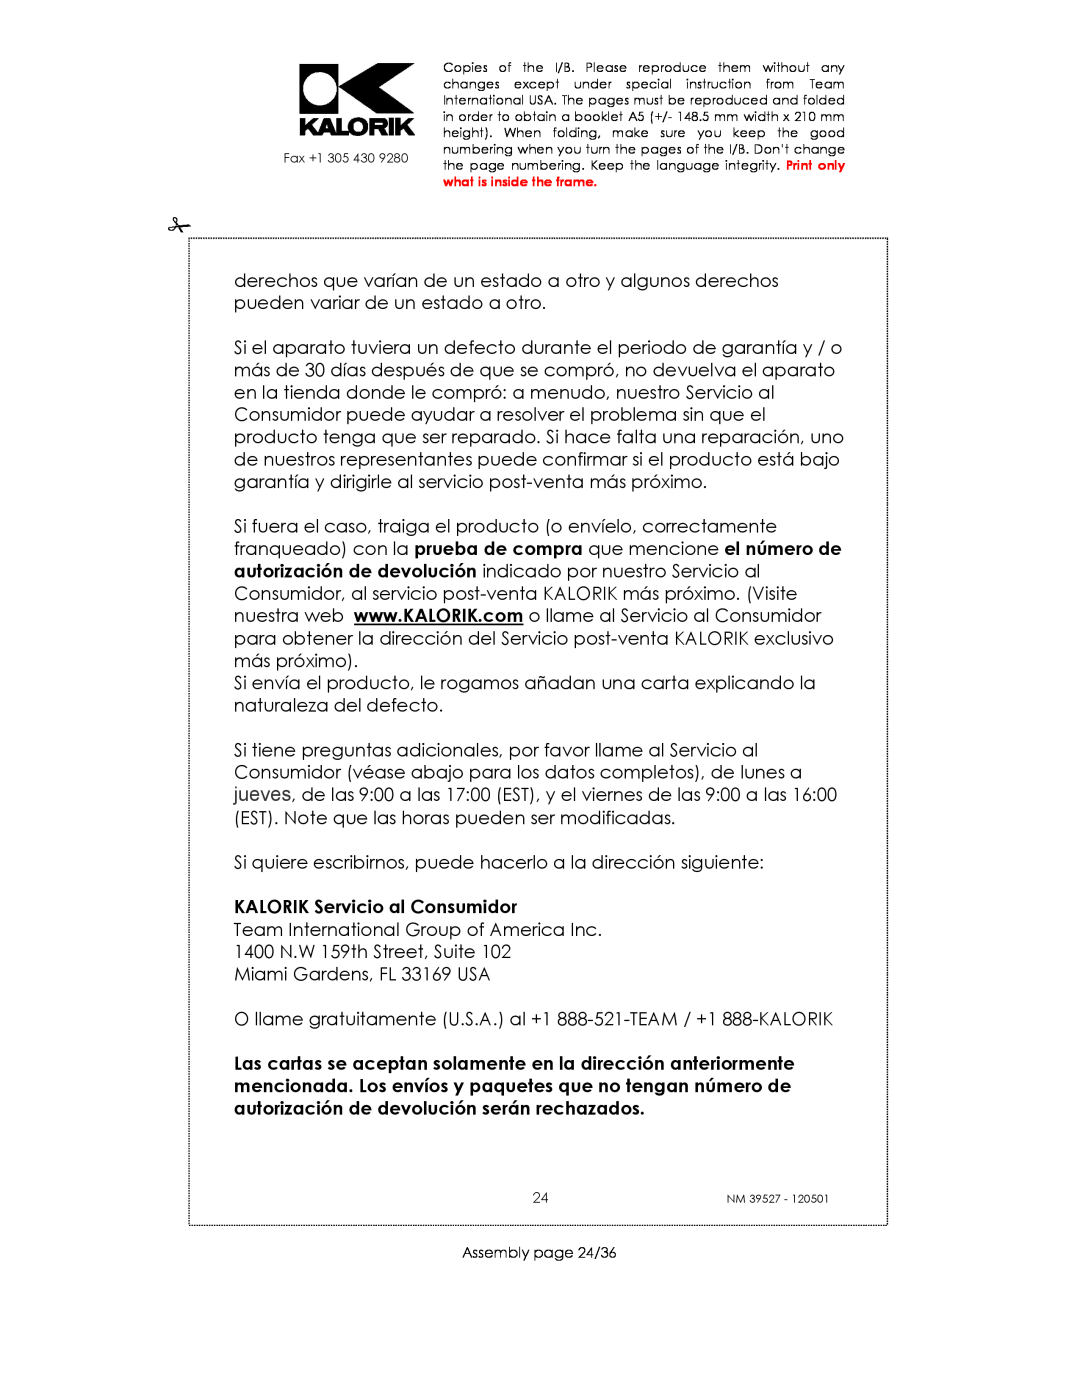 Kalorik NM 39527 manual KALORIK Servicio al Consumidor, Assembly page 24/36 